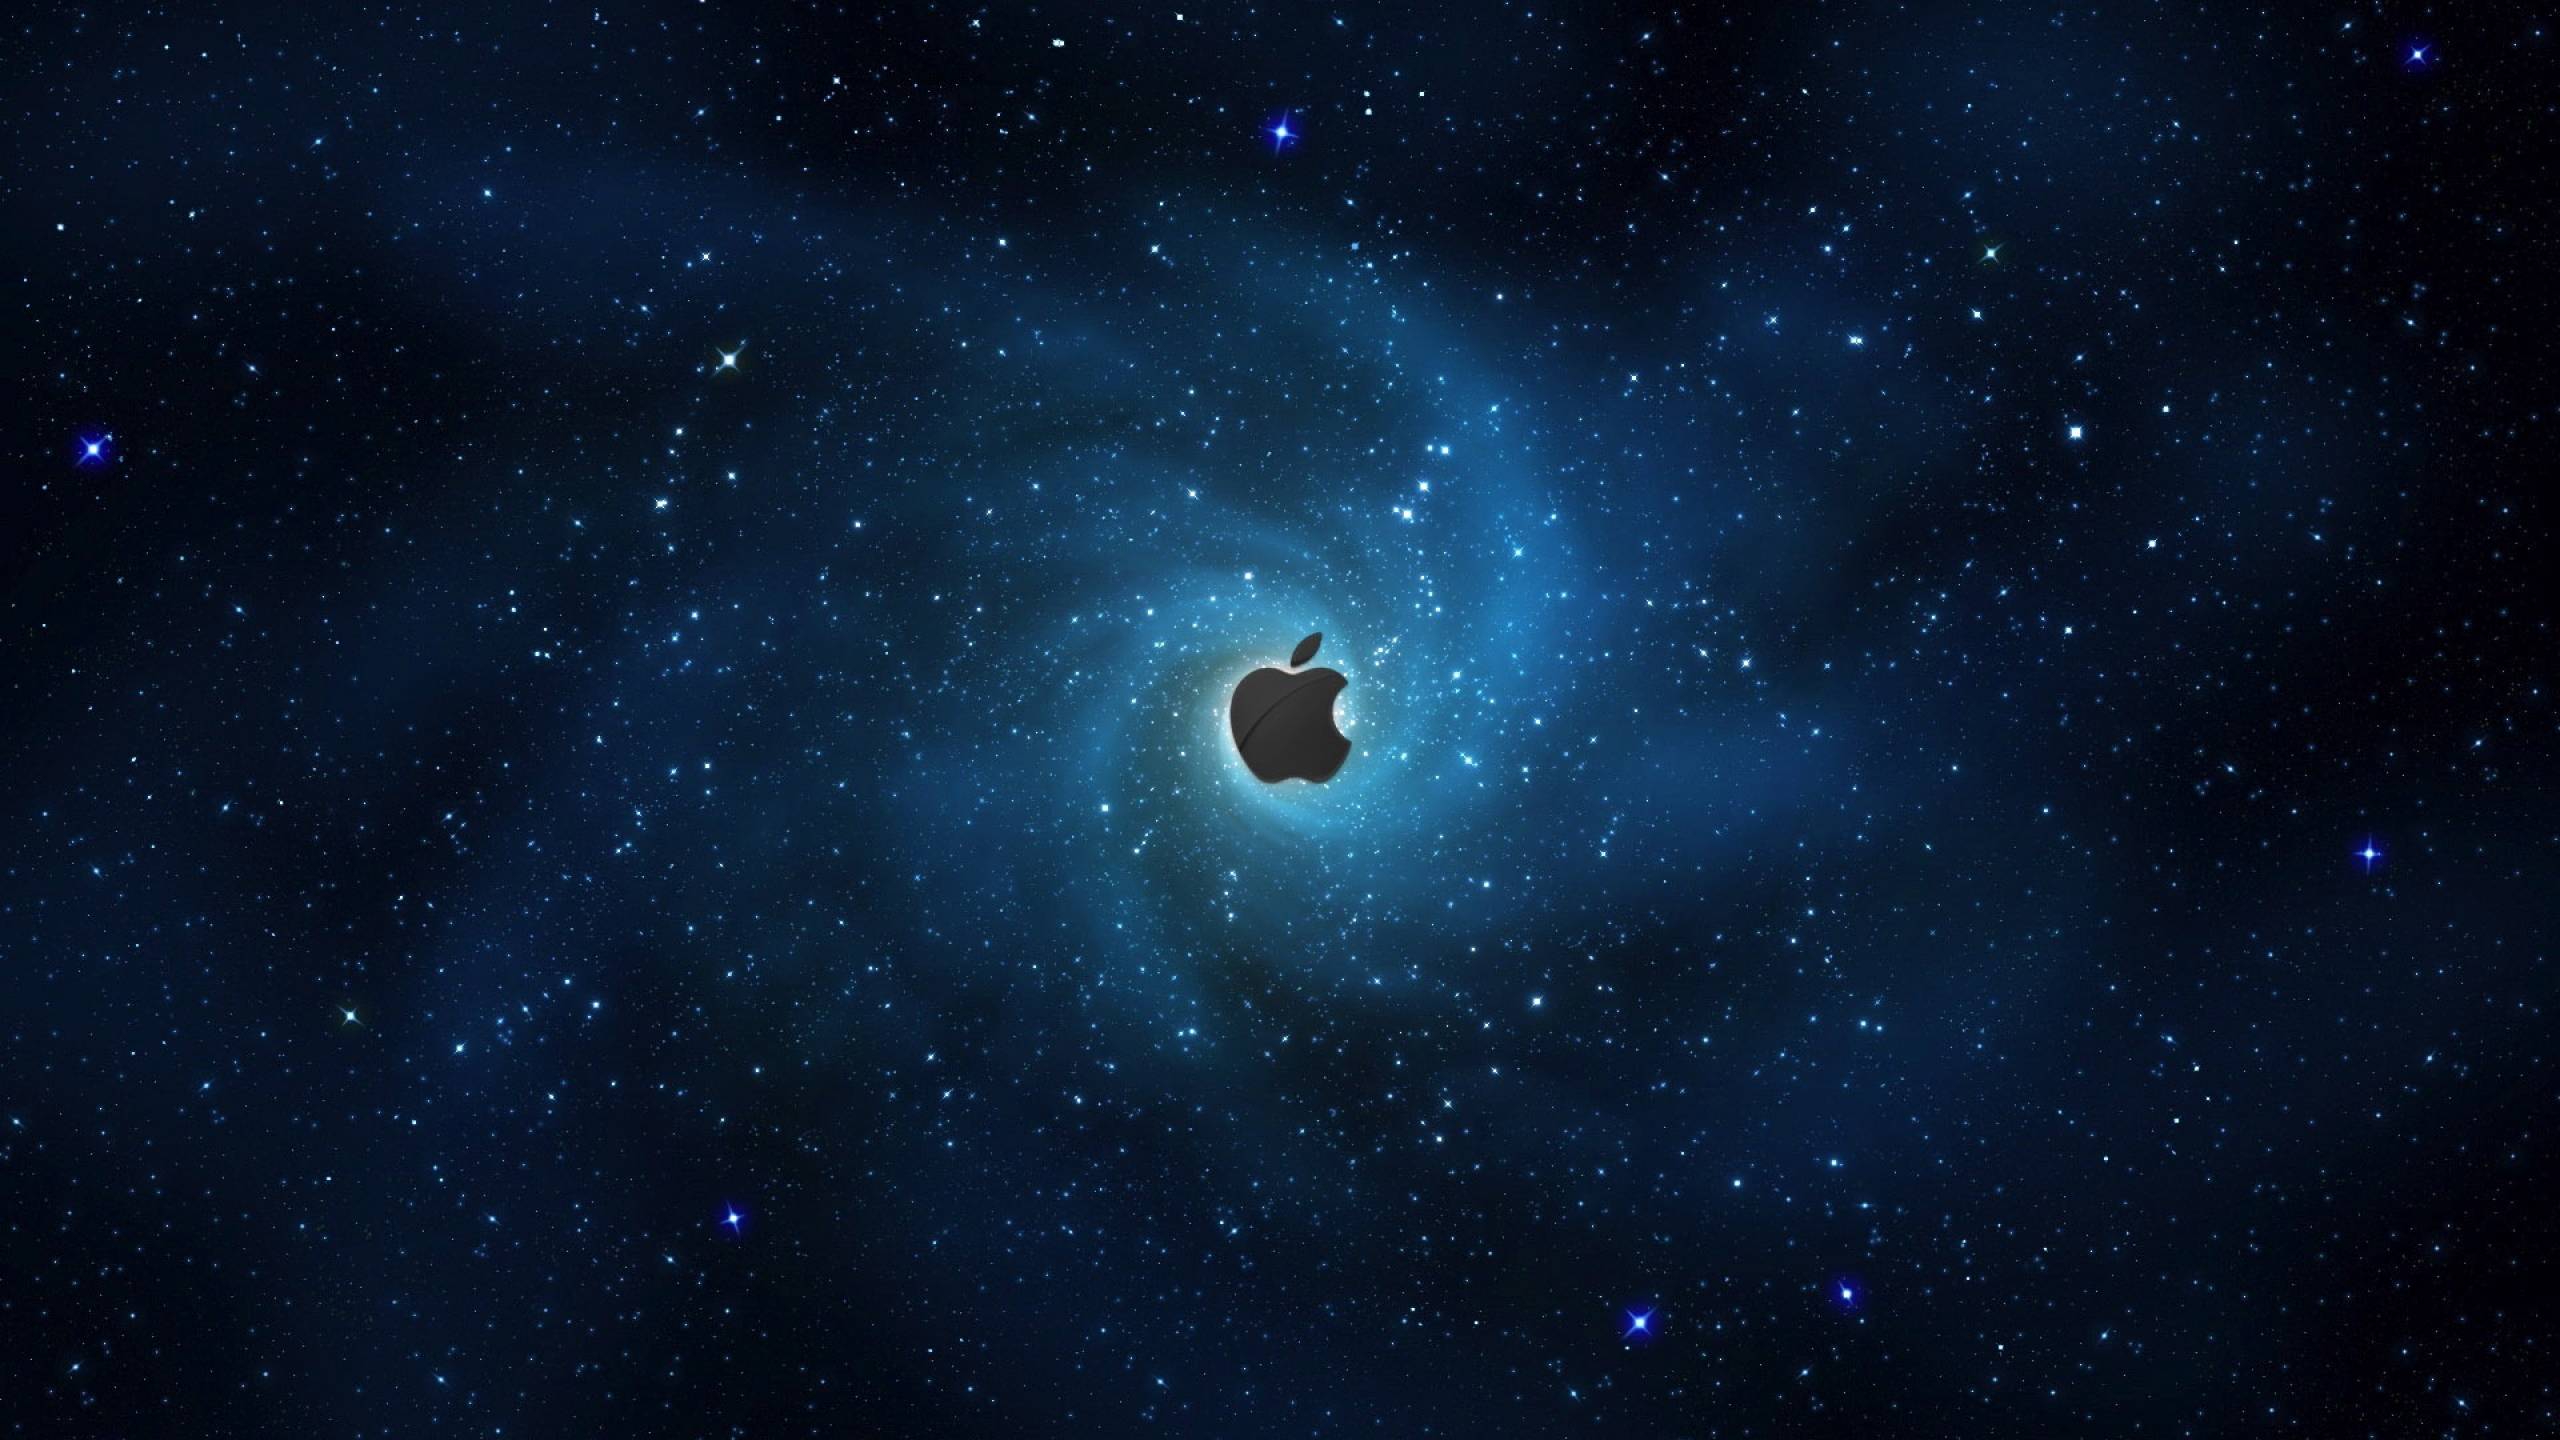 apple imac wallpaper Search Engine